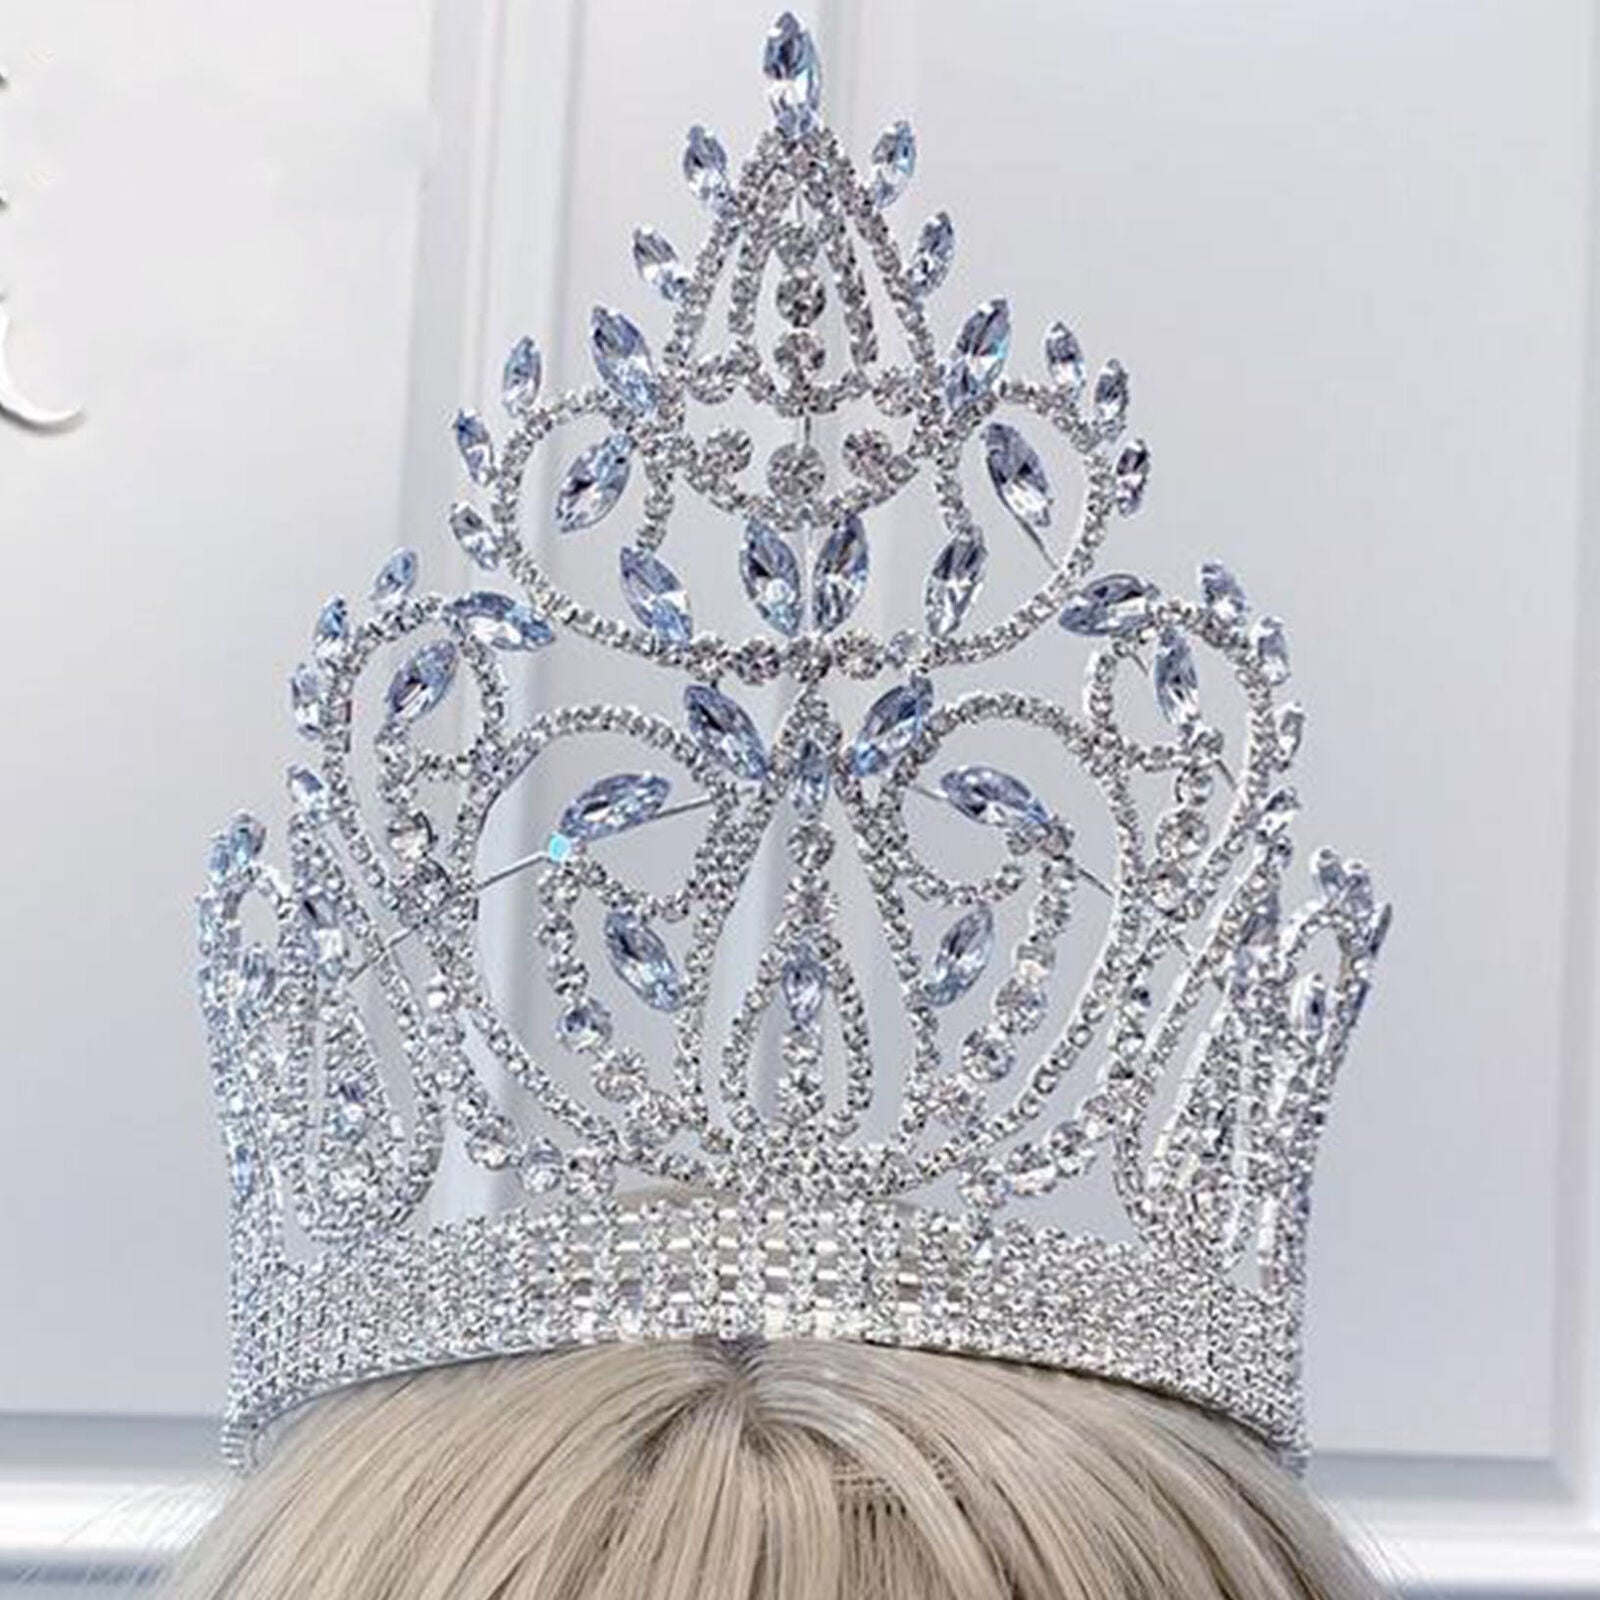 High Crystal Huge Tiara Crown Wedding Bridal Party Pageant Prom Adjustable 17cm